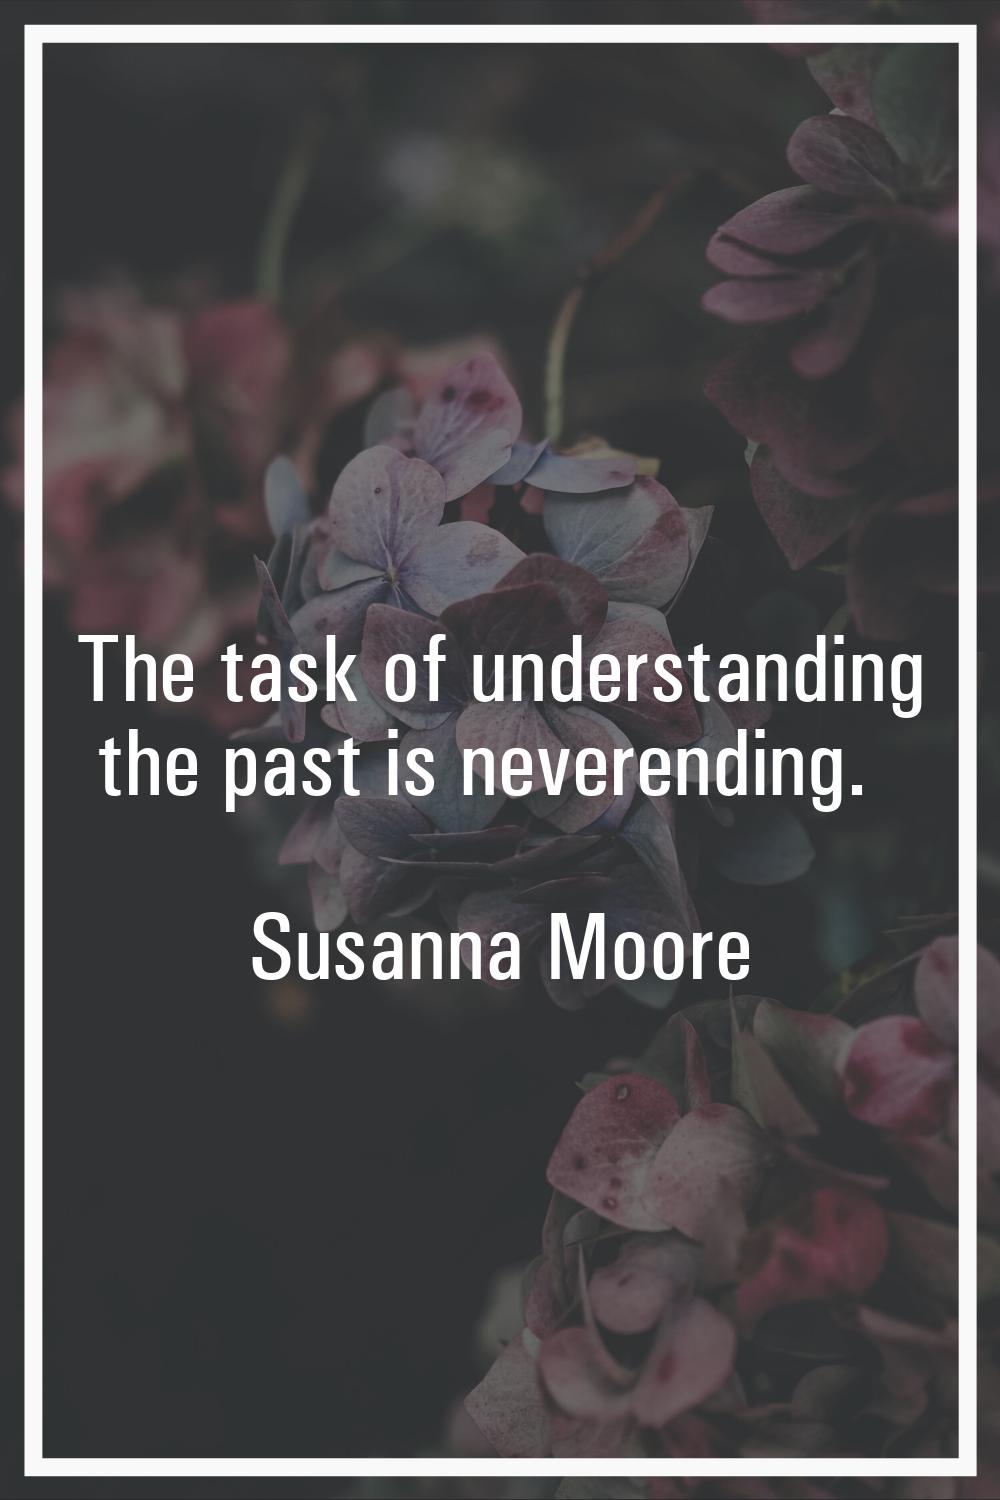 The task of understanding the past is neverending.